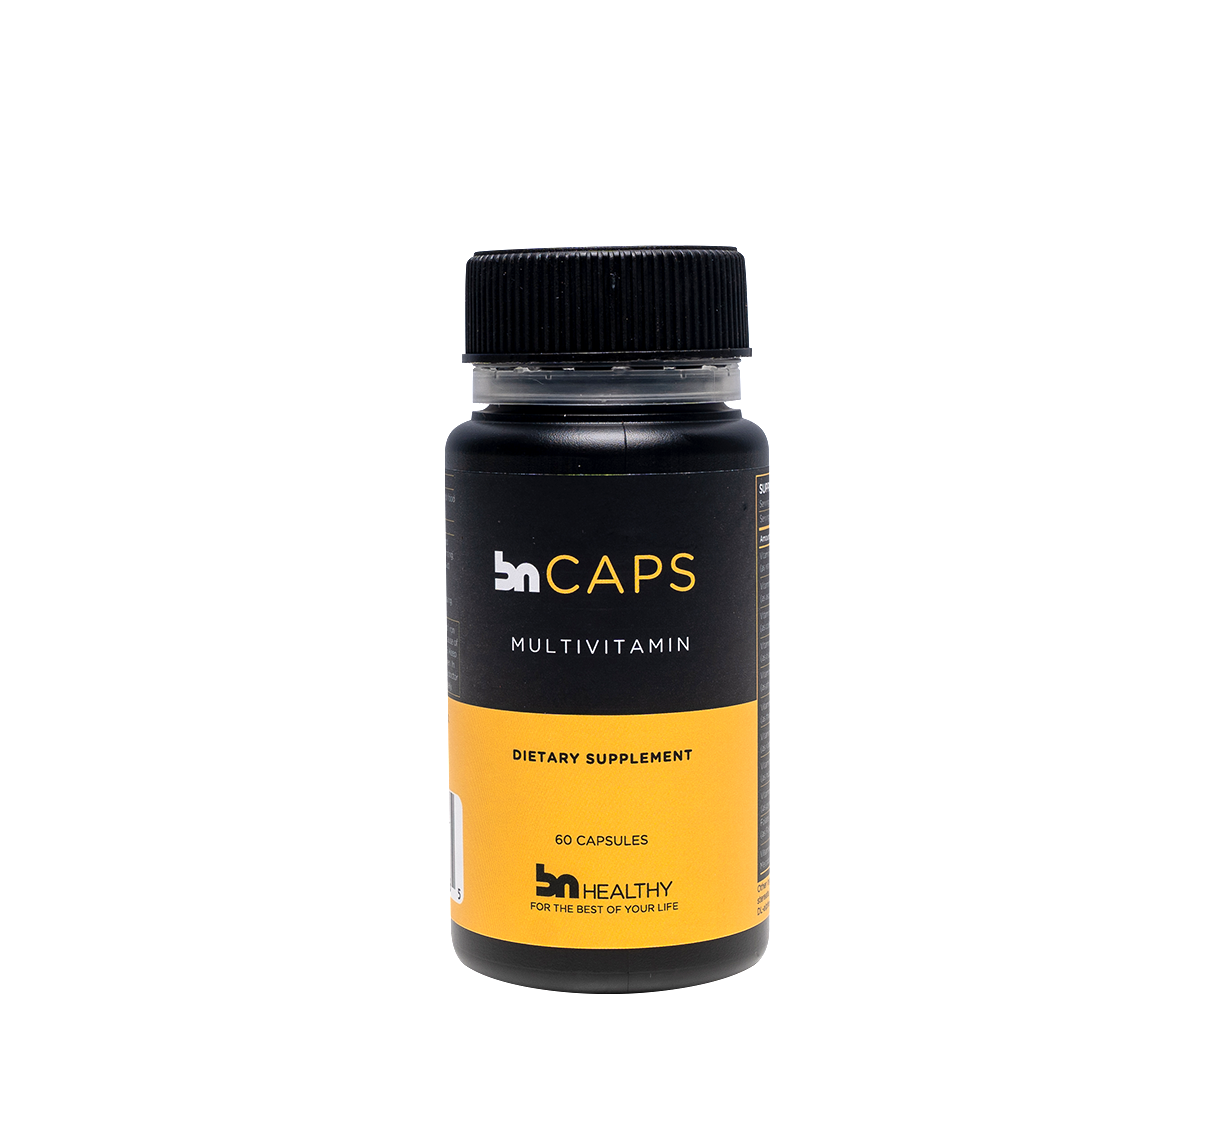 BN Caps - Bariatric Multivitamin Capsules & BN Cal - 3 Months Subscription - Save 25%